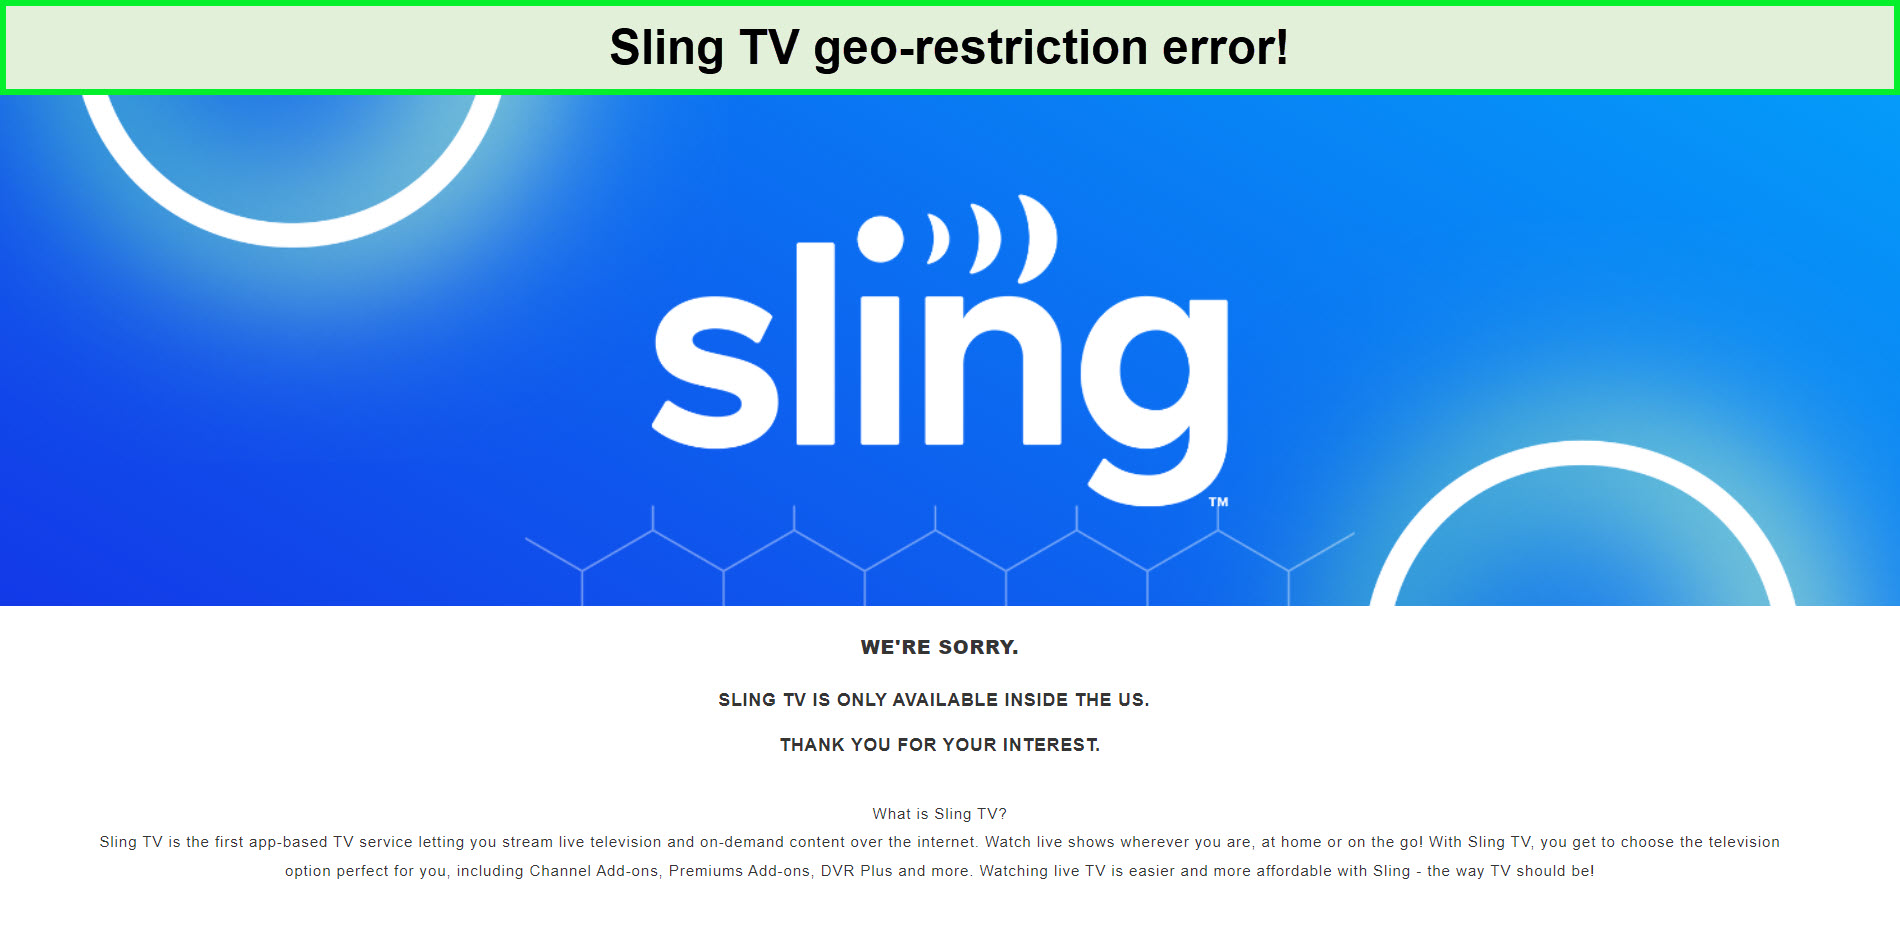 us-sling-geo-restriction-error-in-netherlands